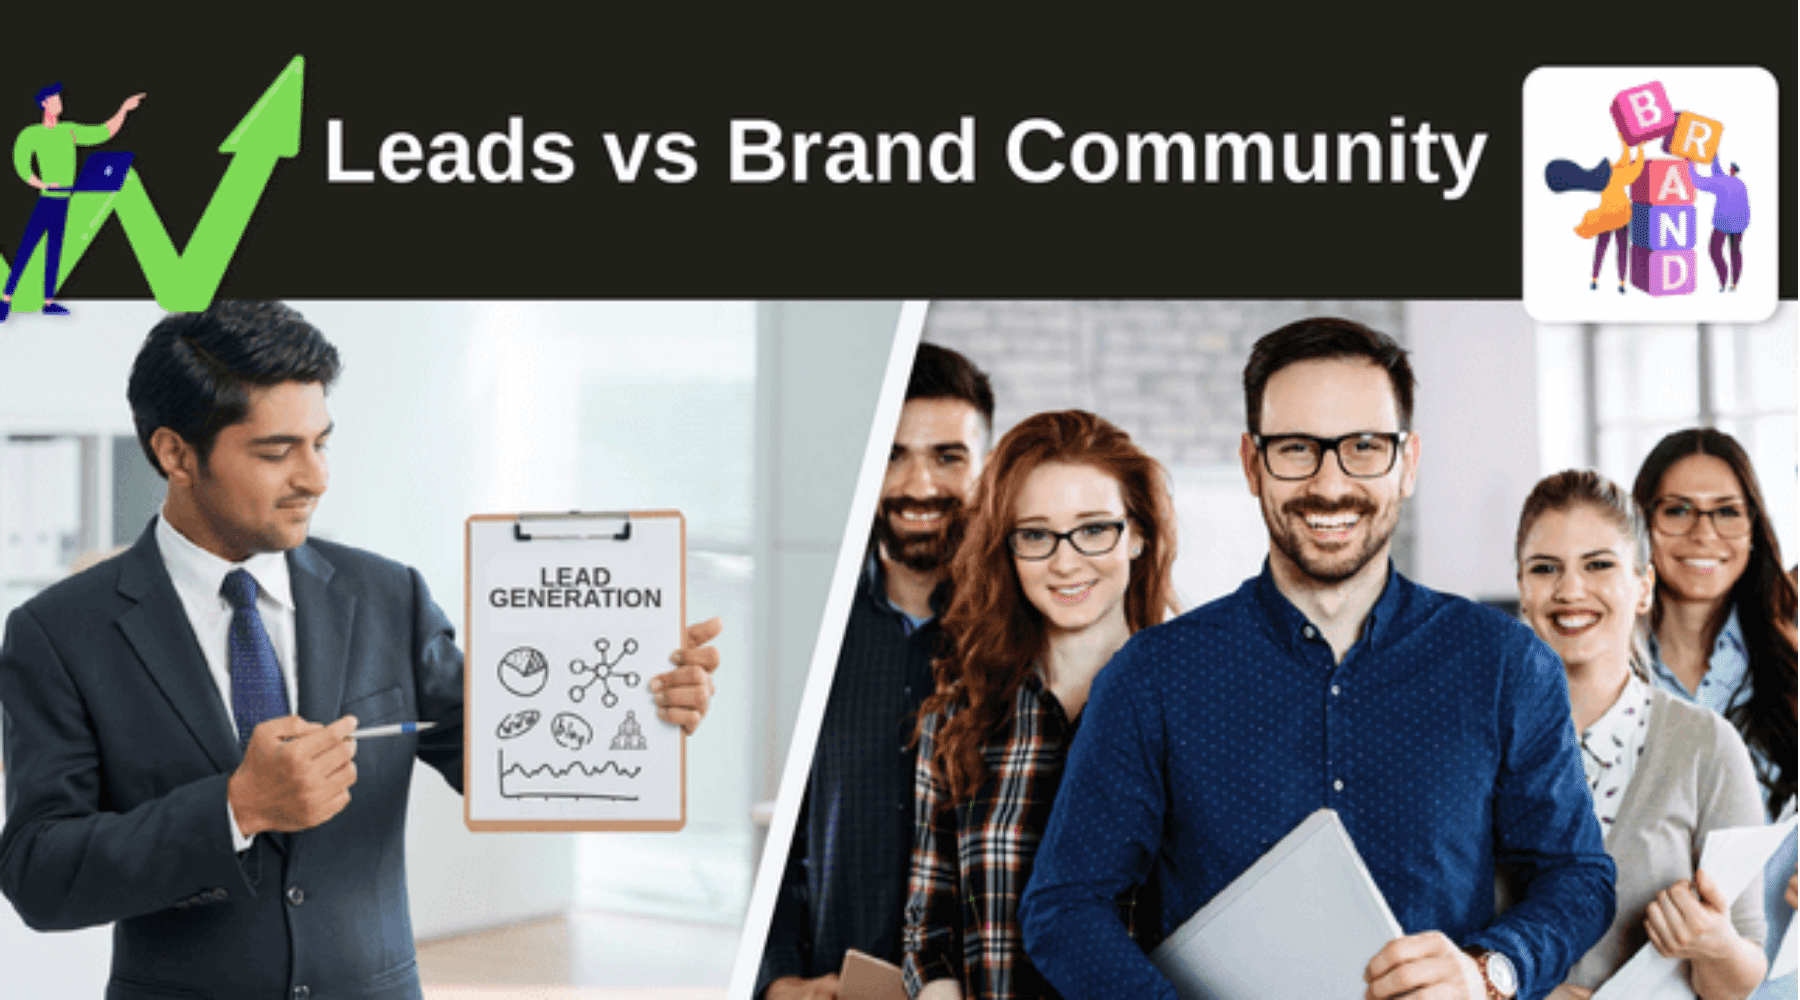 Lead generation vs building an effective brand community